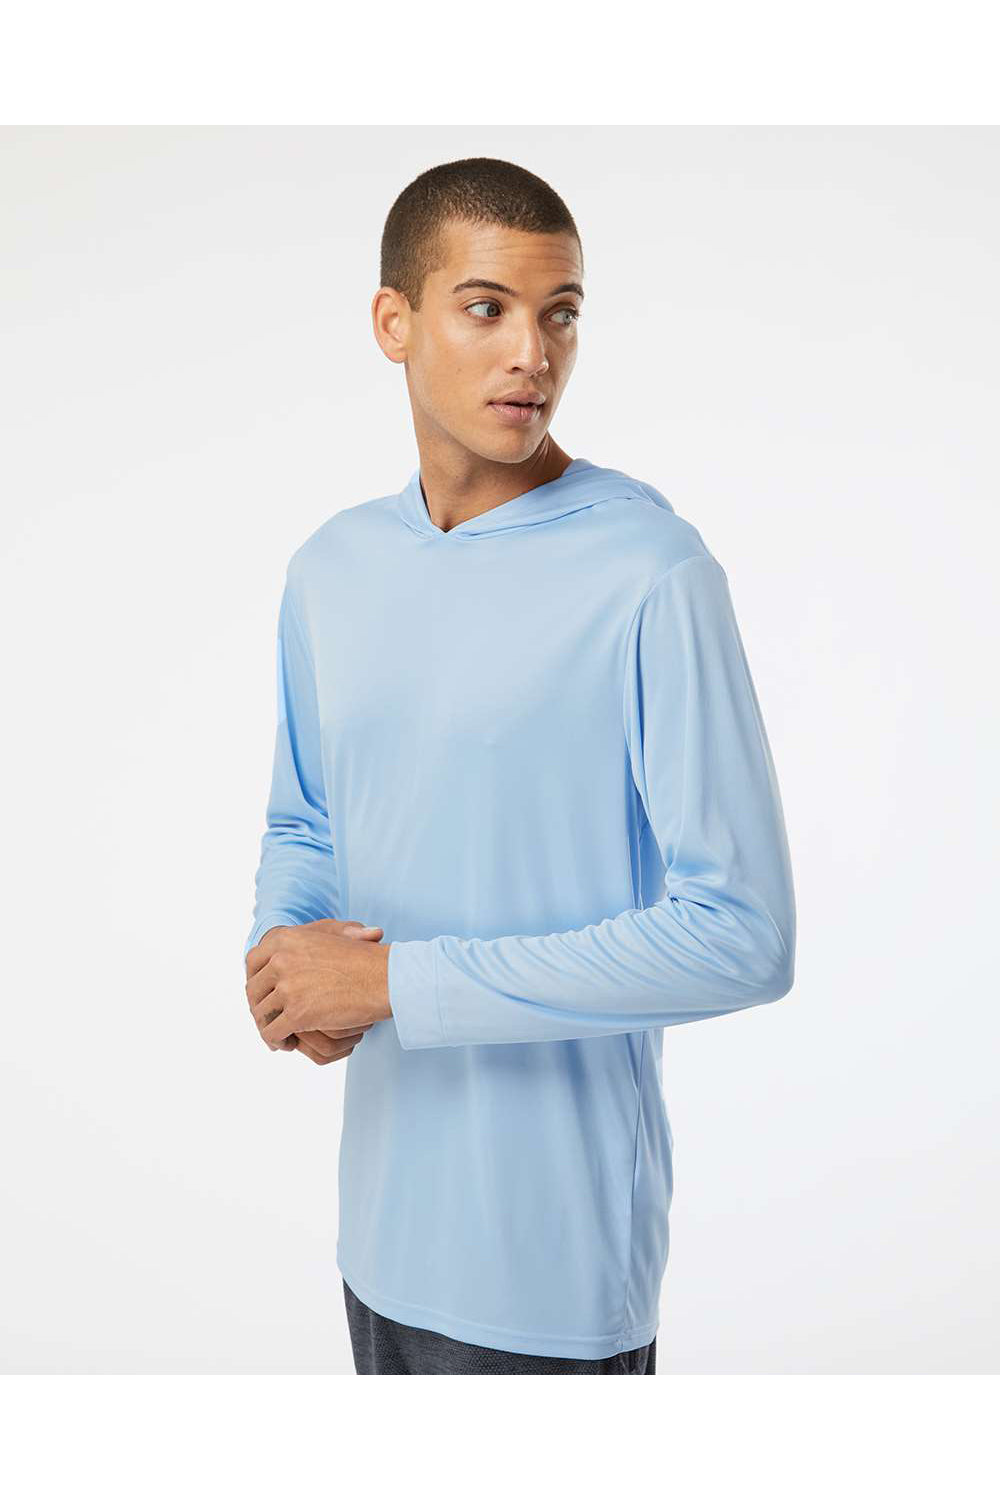 Paragon 220 Mens Bahama Performance Long Sleeve Hooded T-Shirt Hoodie Blue Mist Model Side